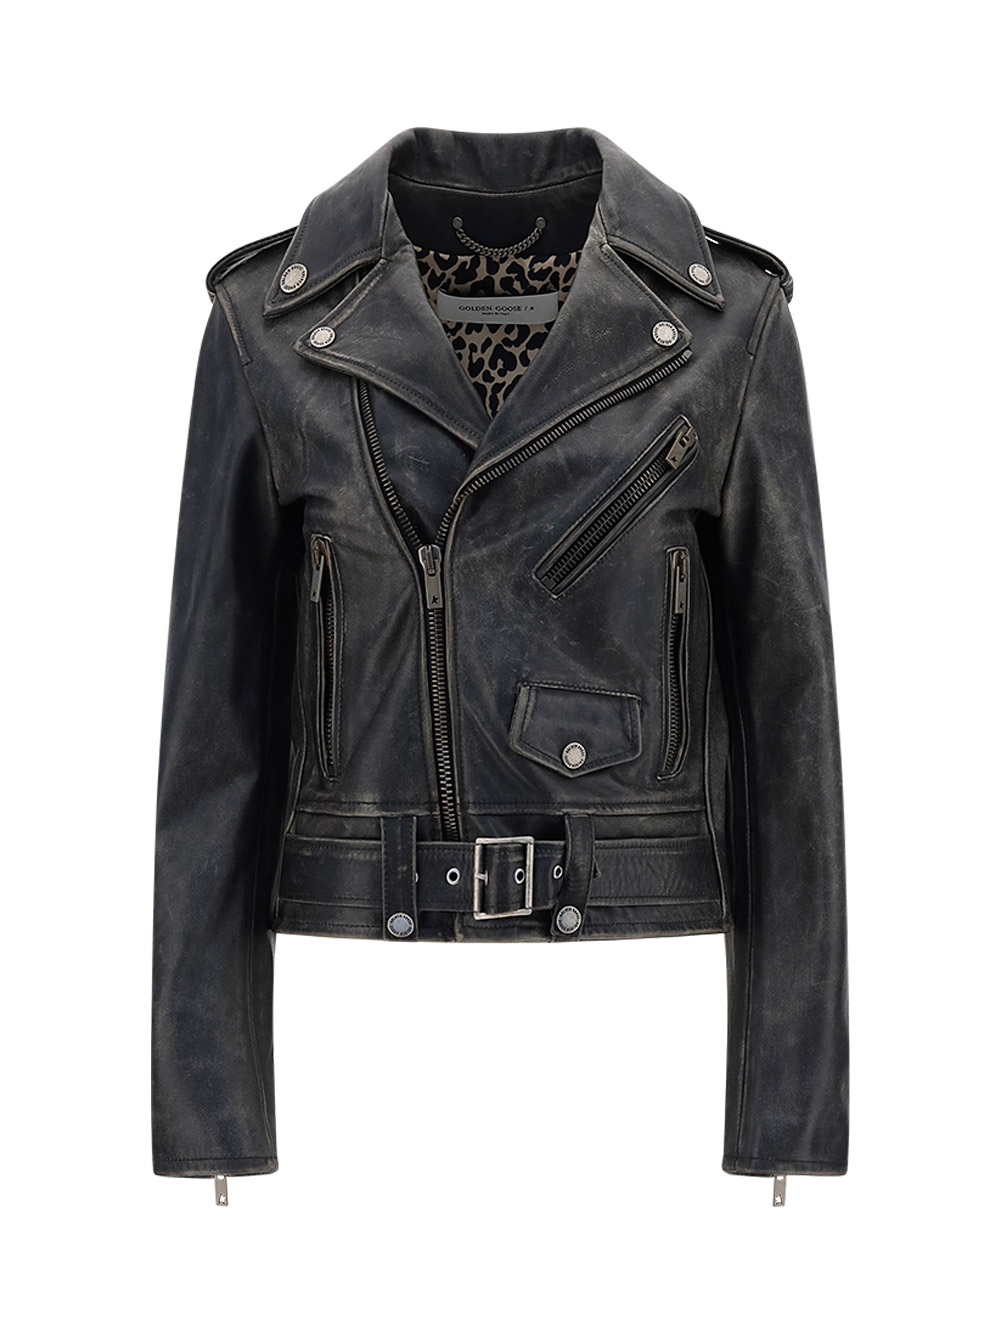 Golden Goose Leather Jacket In Black Leather